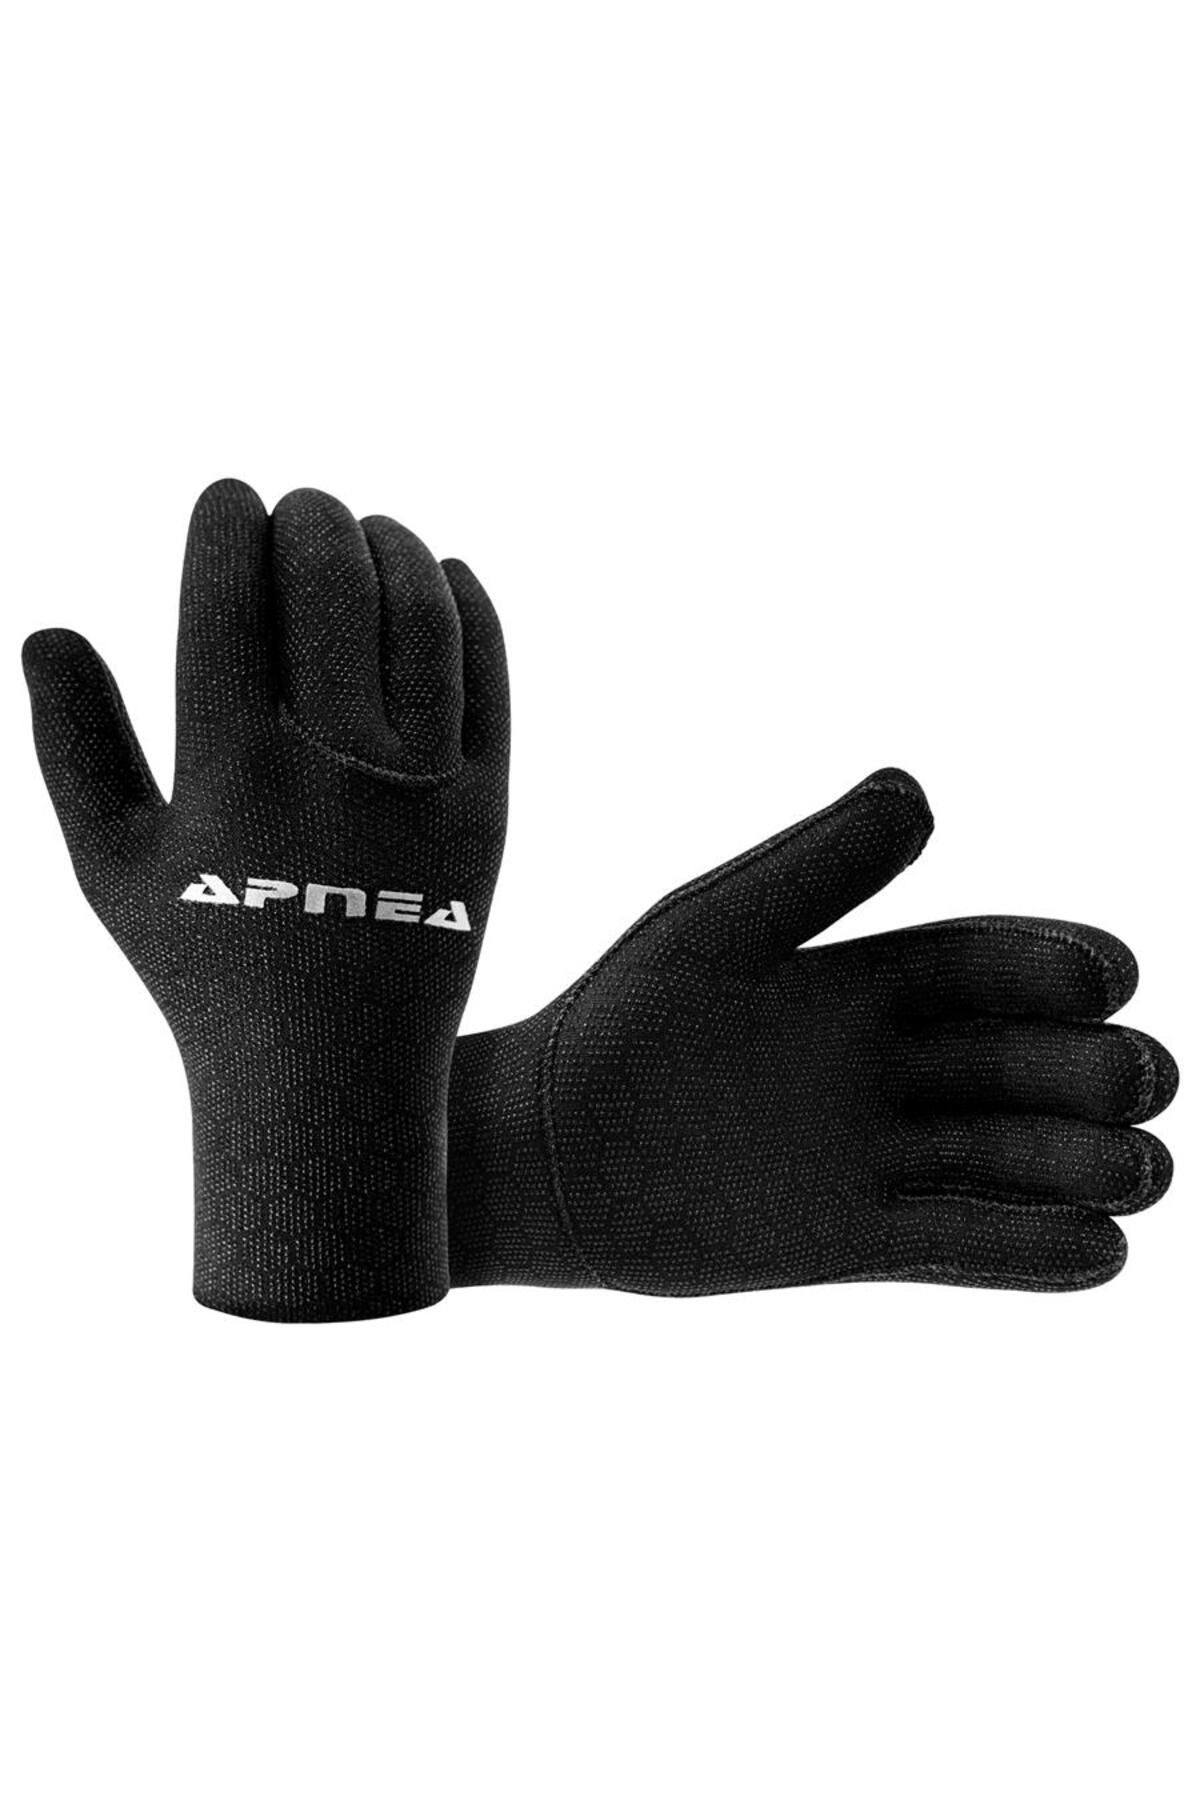 Apnea Süper Extend Glove 3mm Dalış Eldiveni Siyah-xl